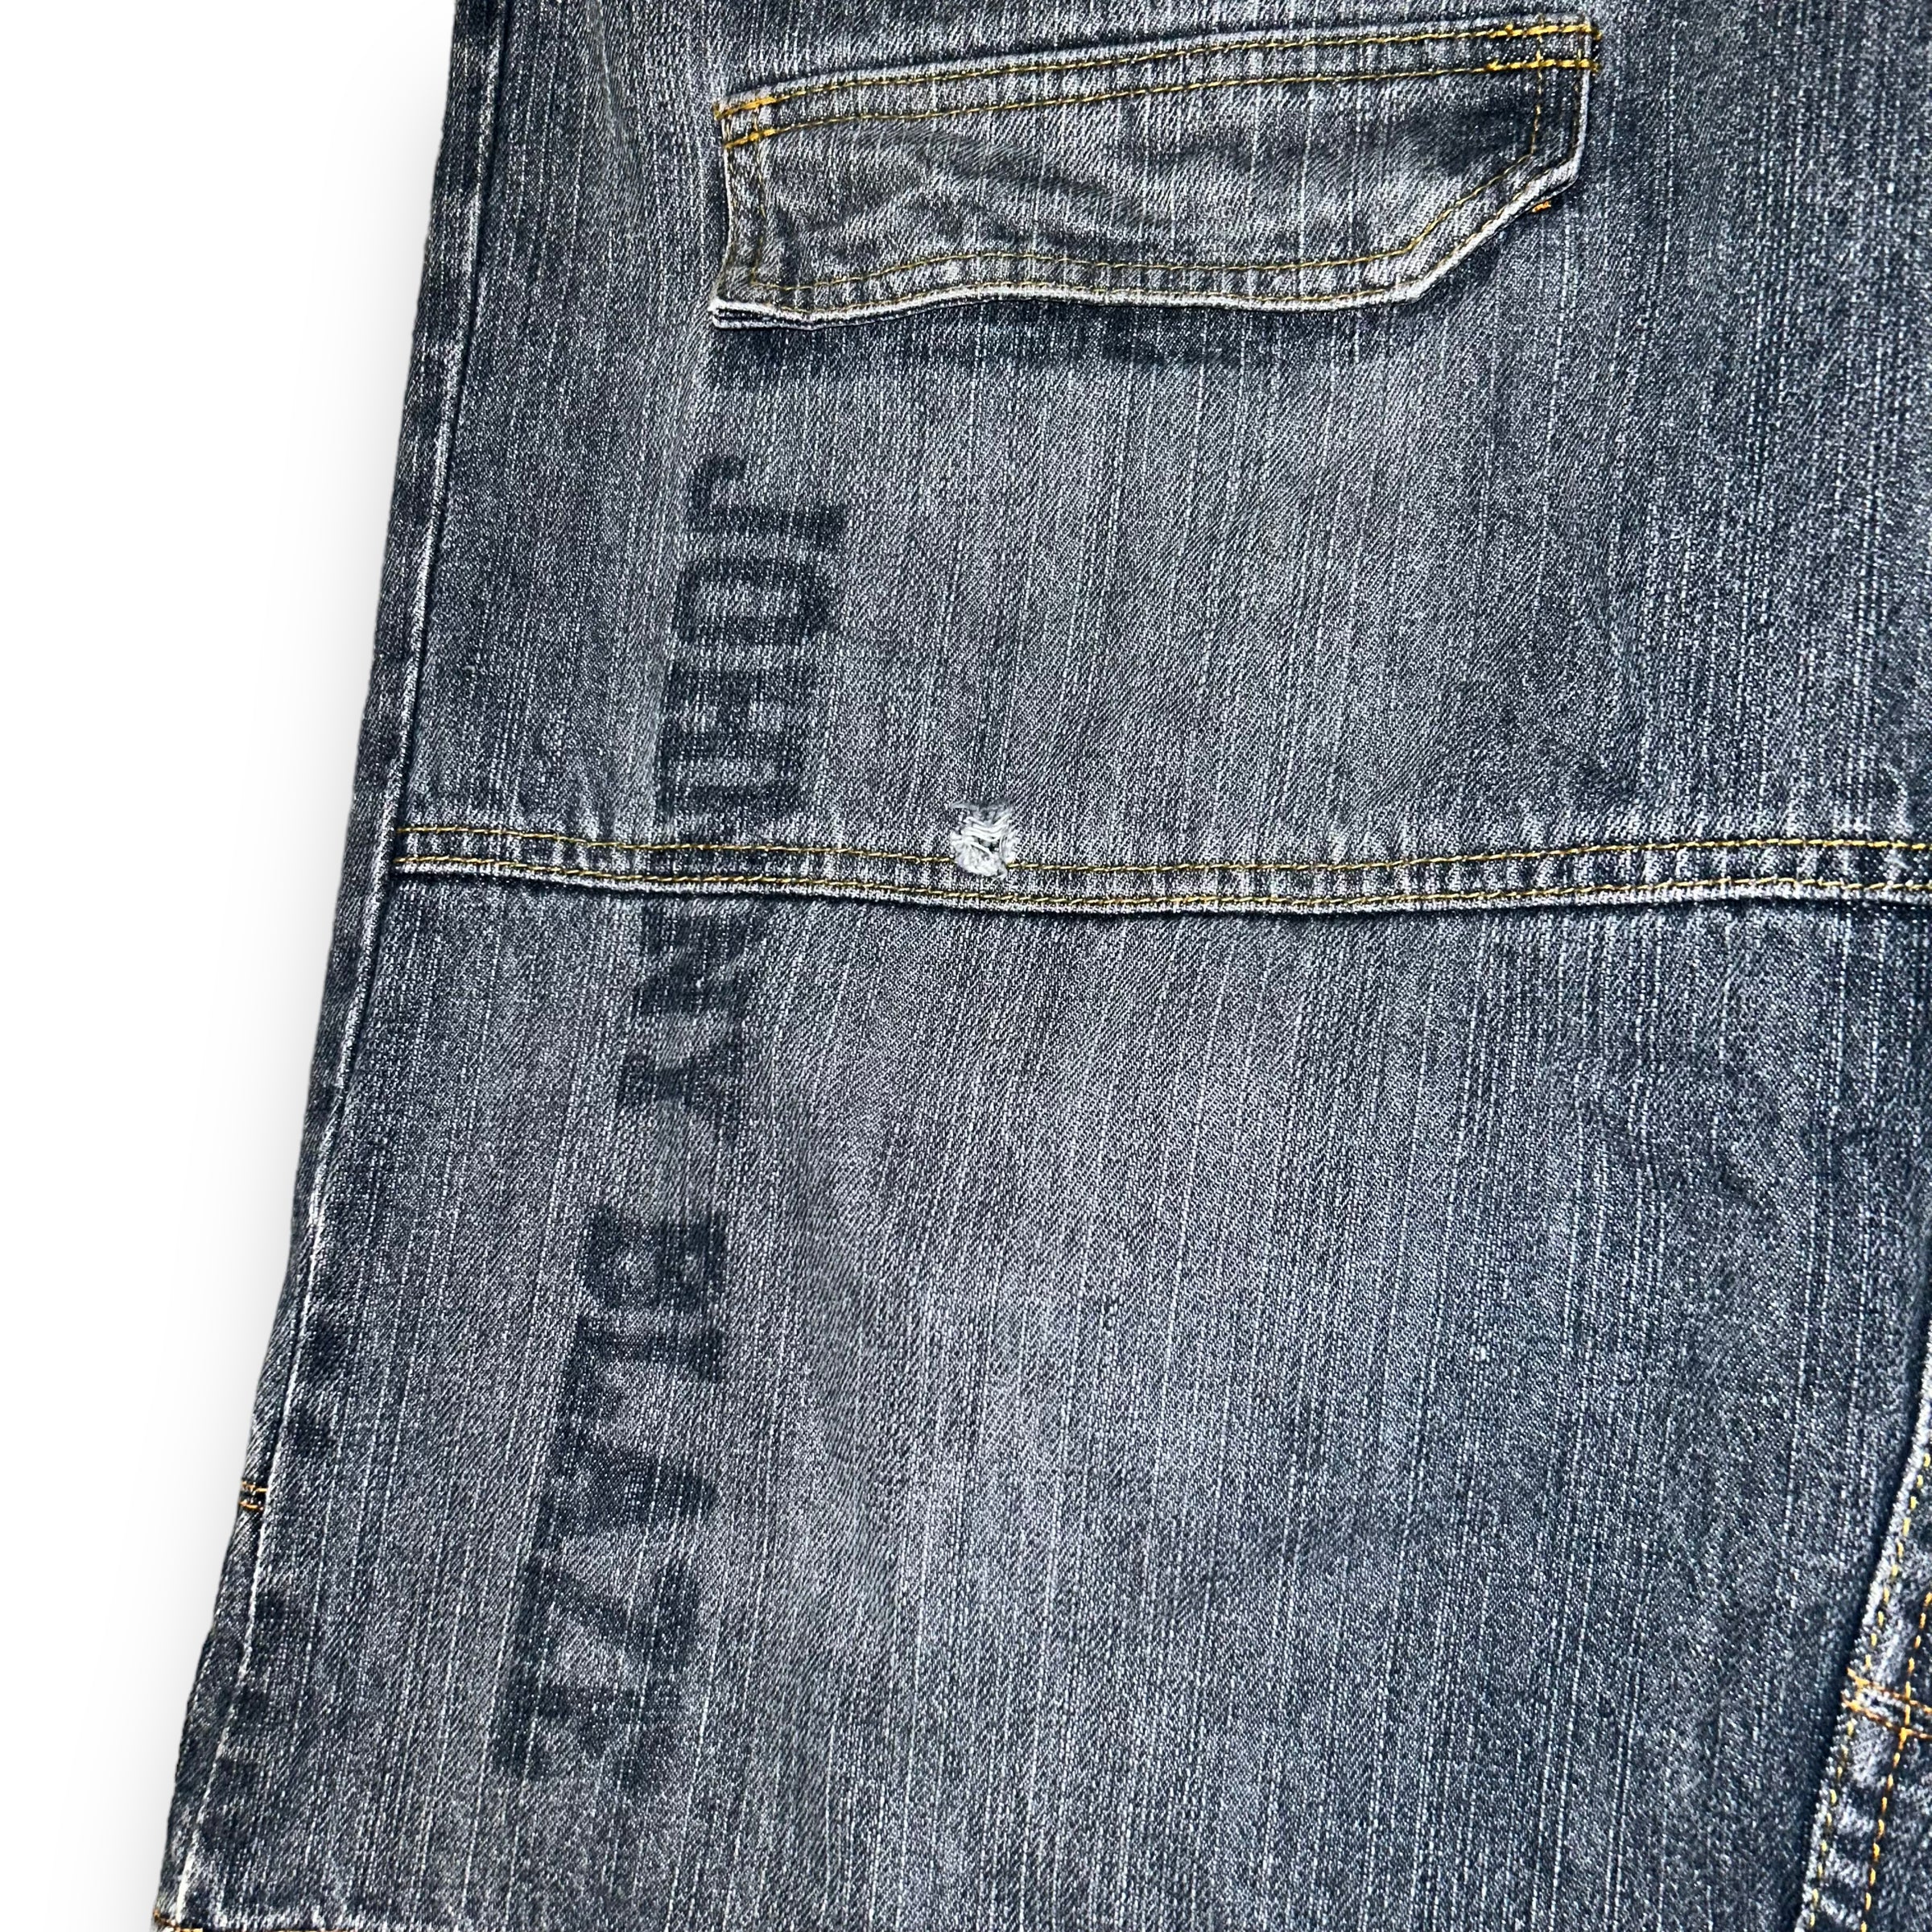 Baggy Shorts Johnny Blaze Vintage (34 USA L) - oldstyleclothing